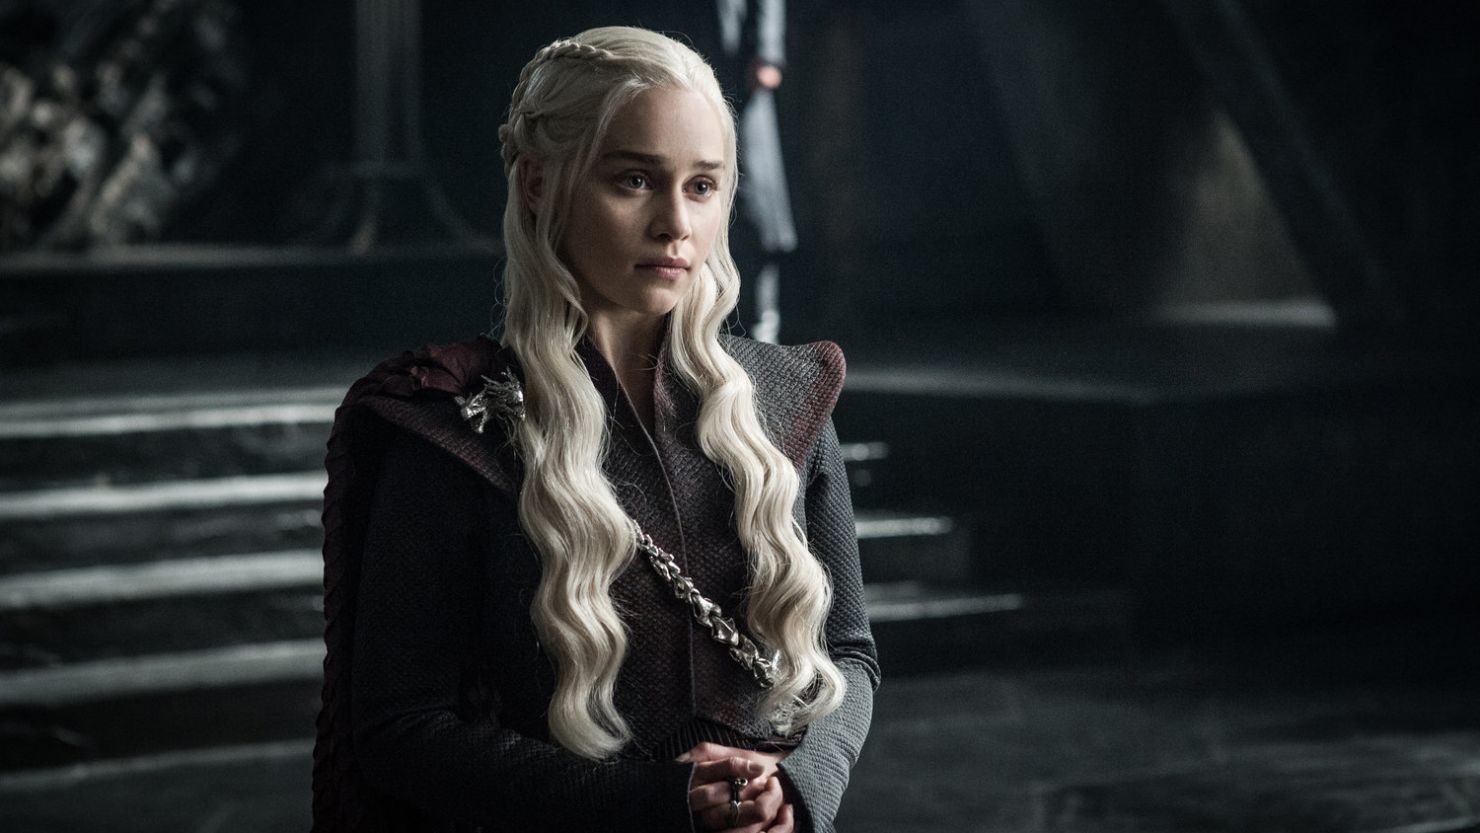 Emilia Clarke as Daenerys Targaryen, one of the show's many strong women.